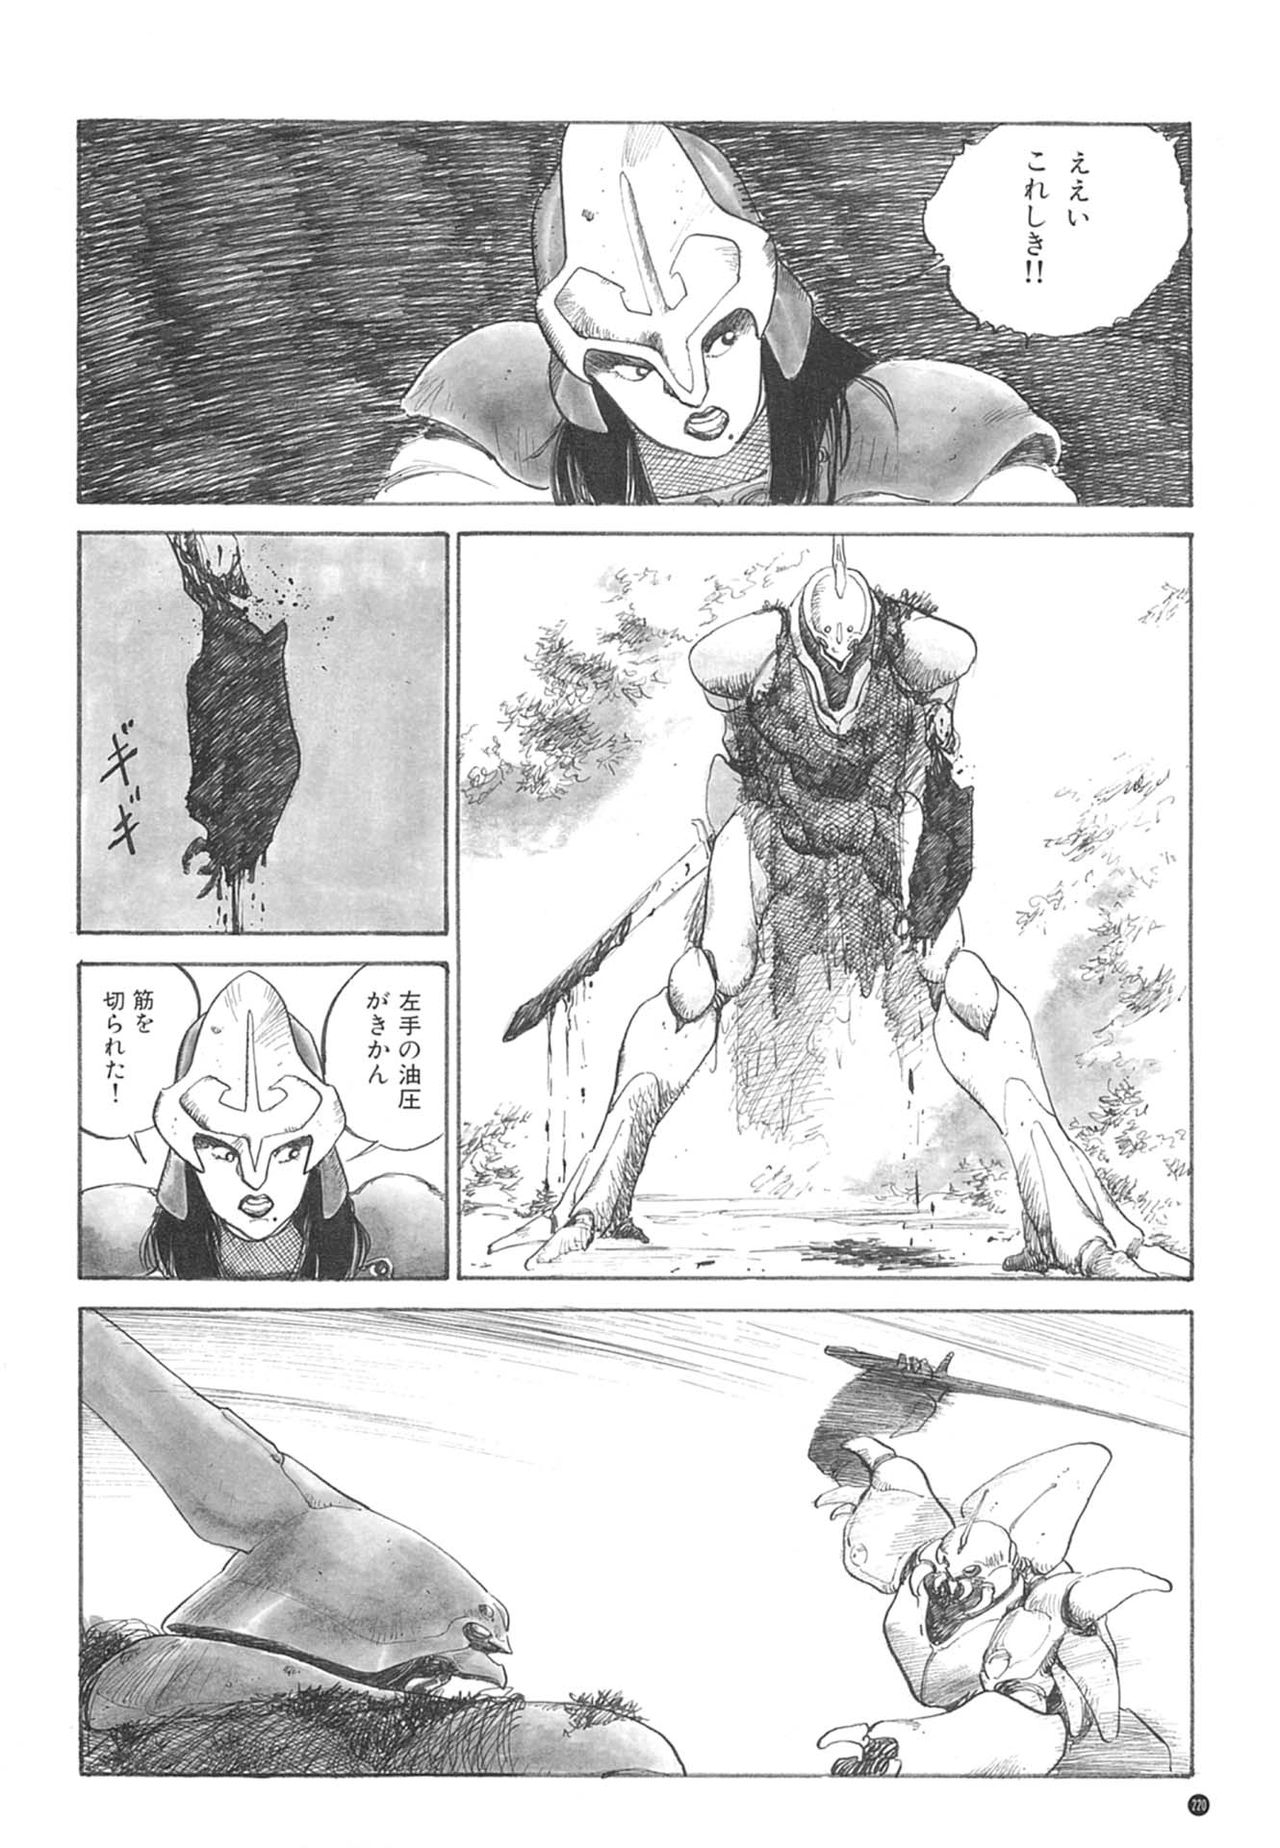 [Kazuhisa Kondo] Kazuhisa Kondo 2D & 3D Works - Go Ahead - From Mobile Suit Gundam to Original Mechanism 219